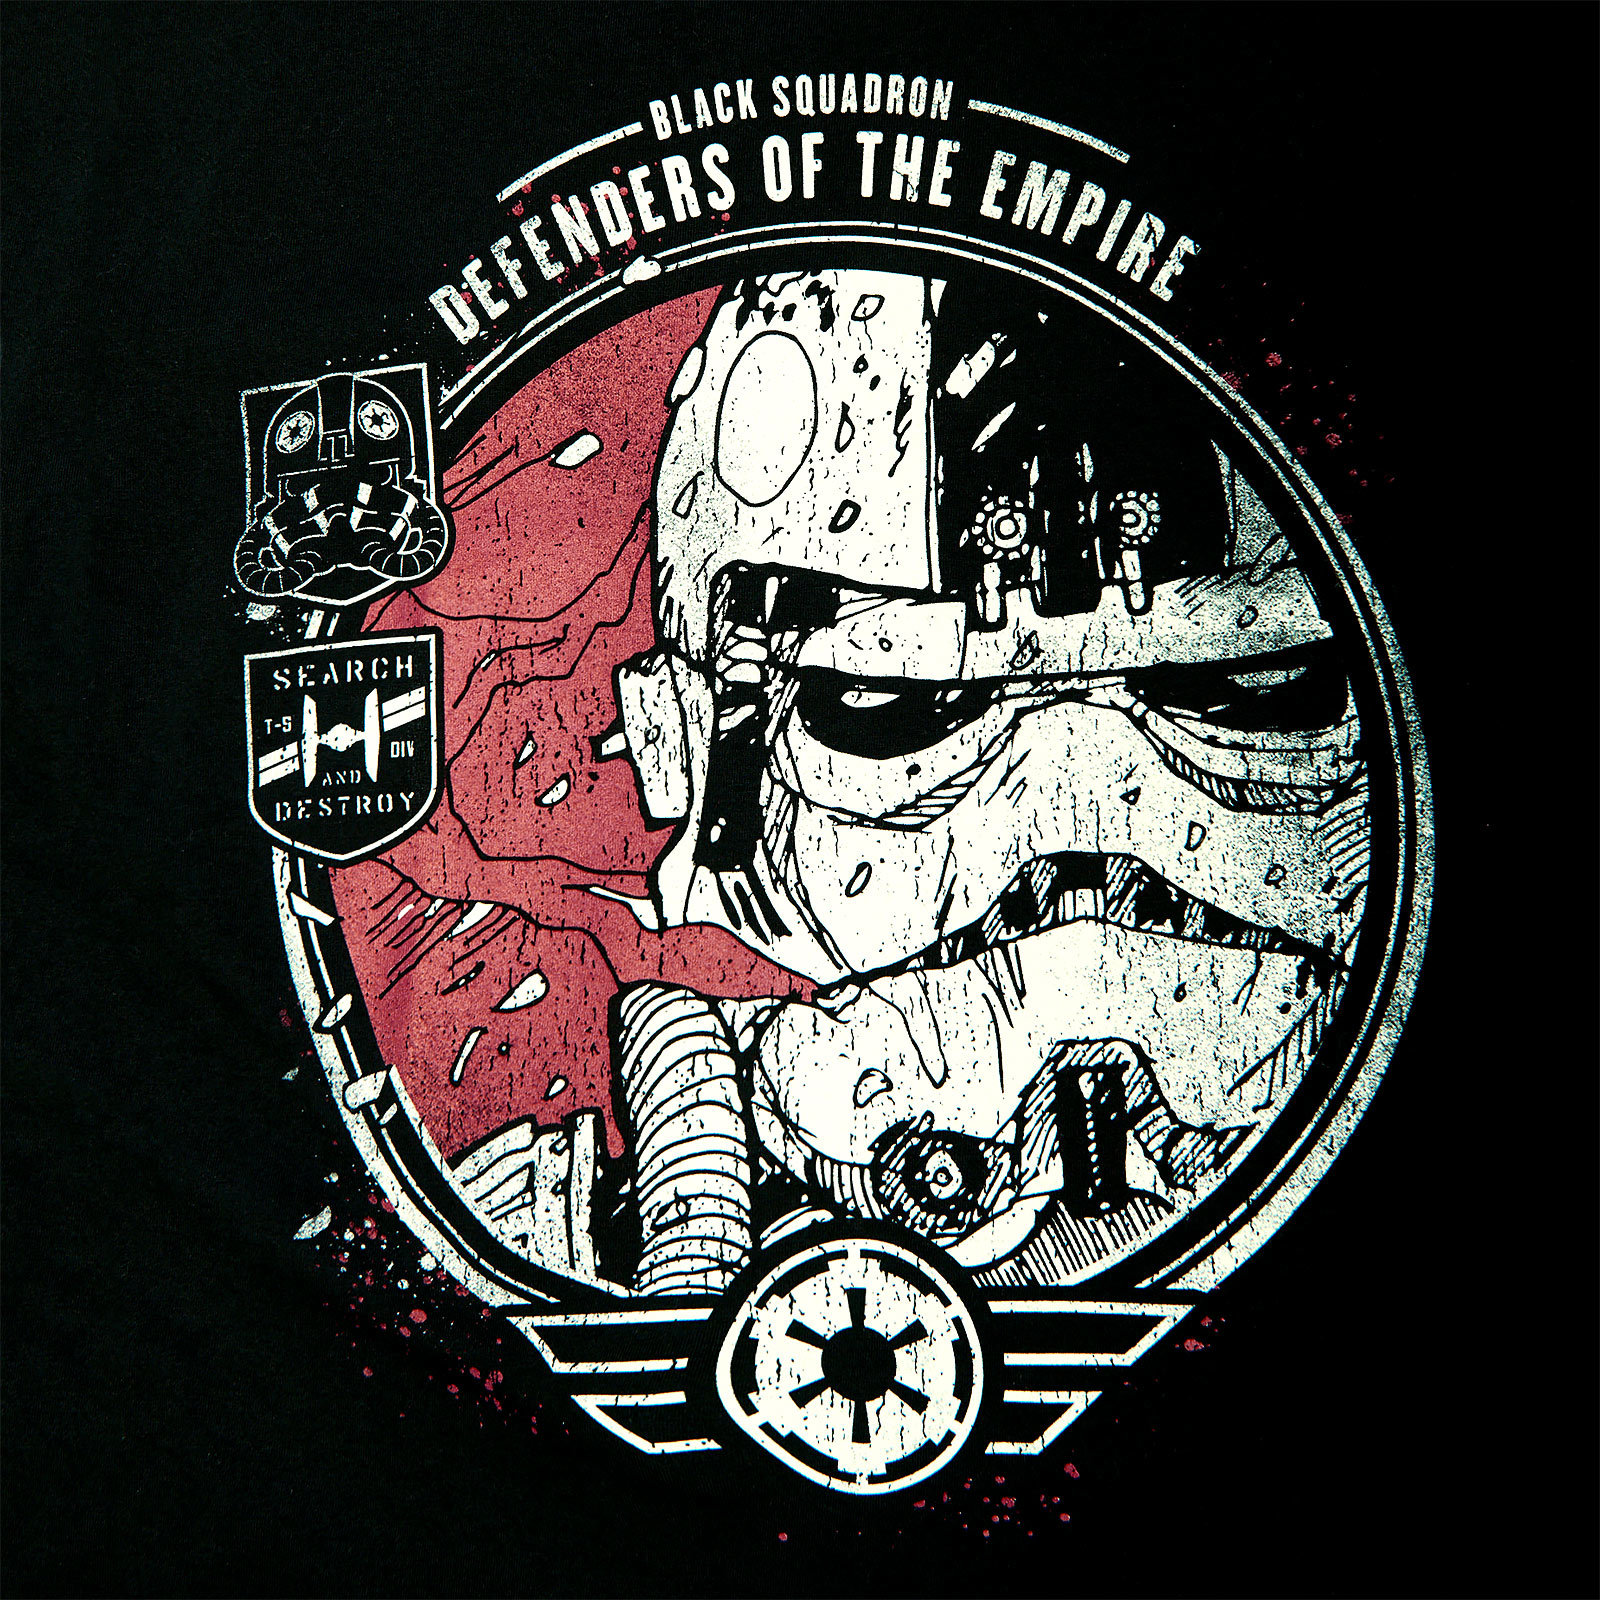 Star Wars - Black Squadron T-Shirt Black